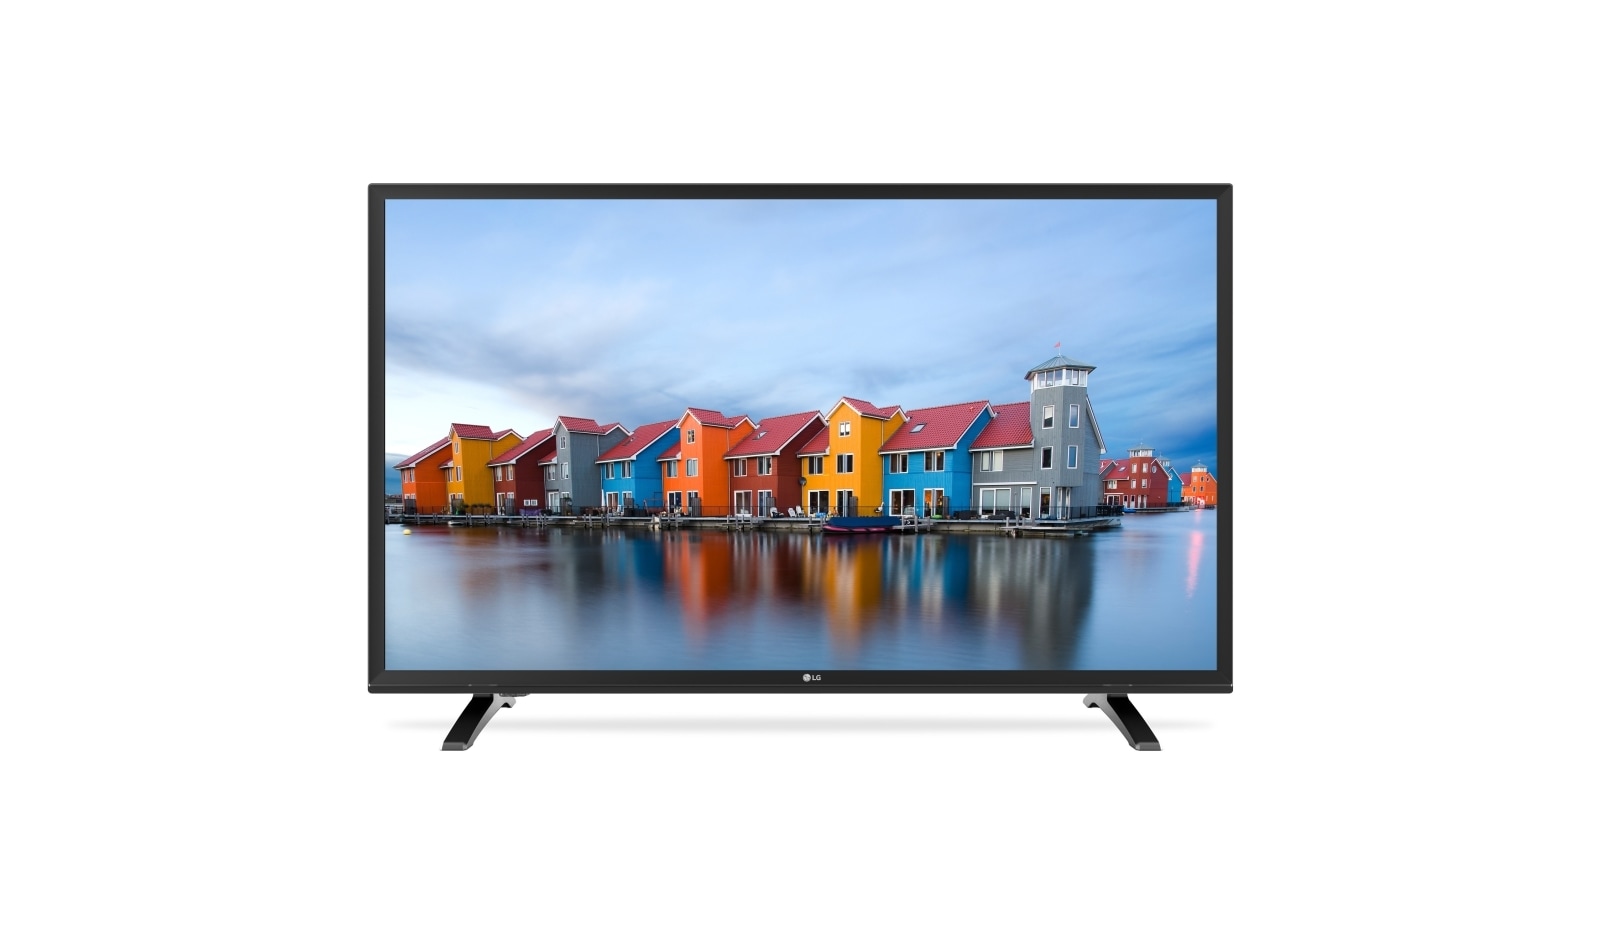 Televisor LG LED-backlit LCD TV – Smart TV 32″ – 1080p Full HD – IPS –  Telalca Store Ecuador